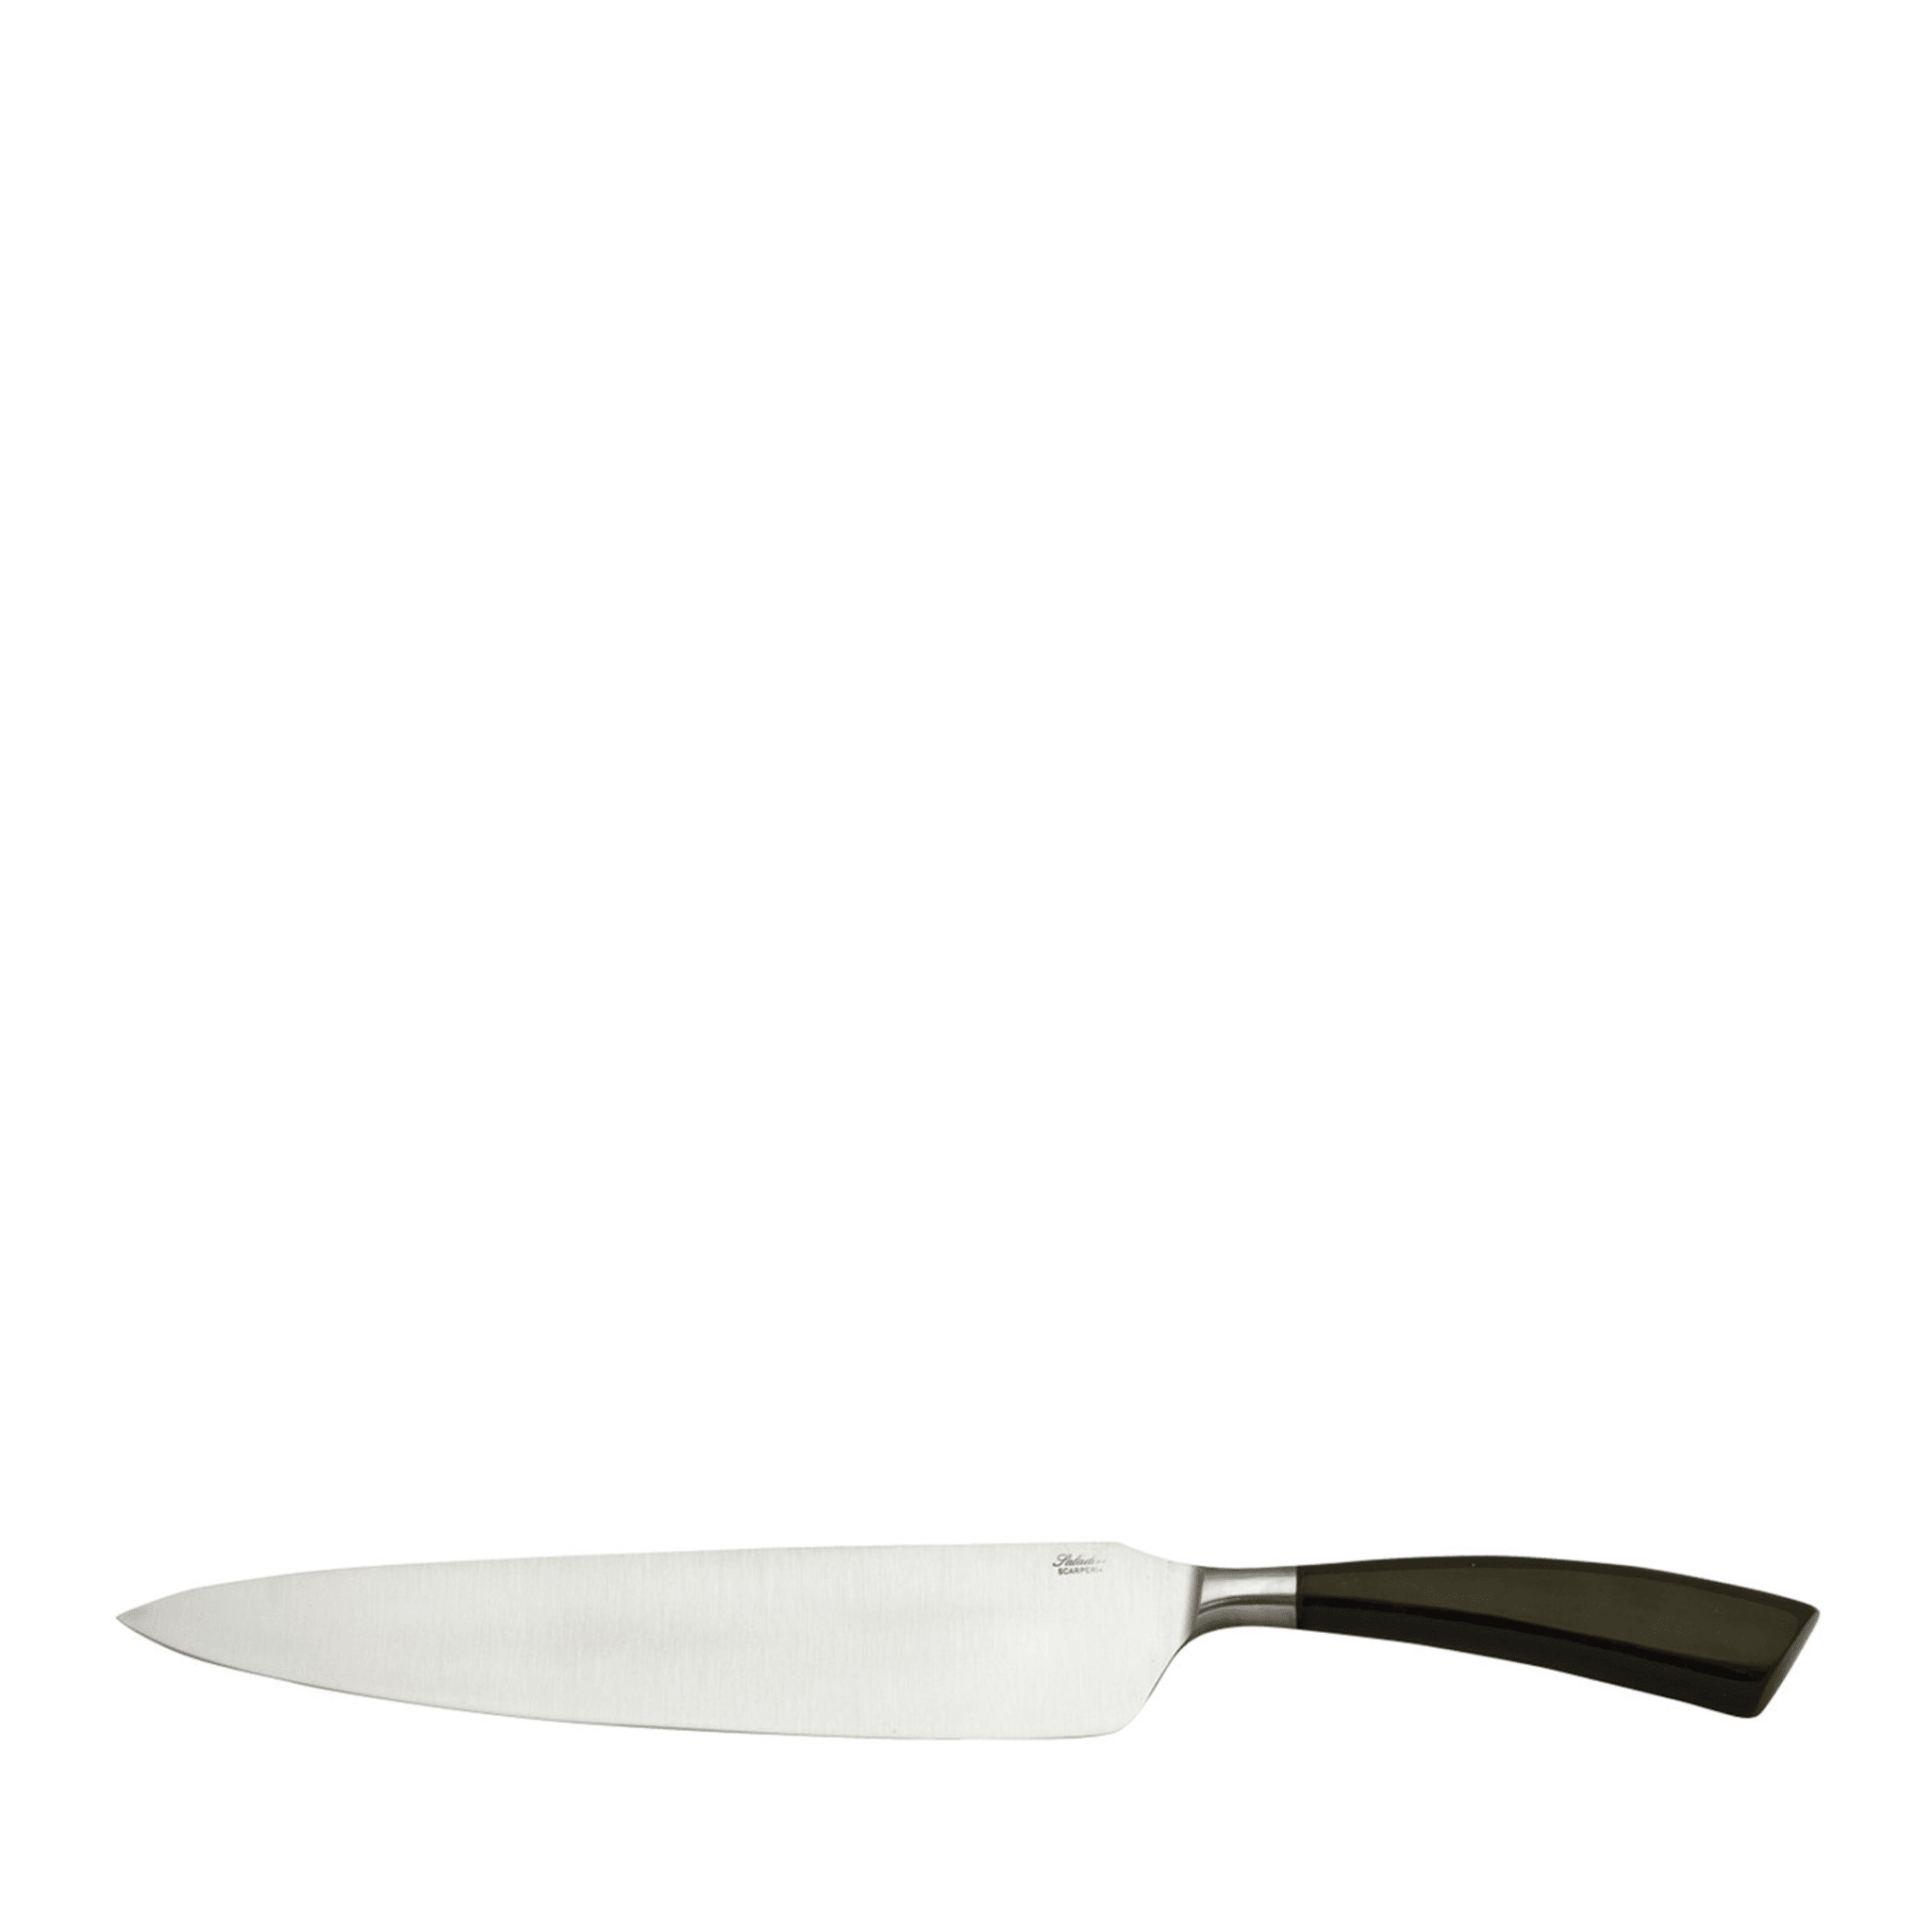 Set of 6 Table Knives White Resin Handles Scarperia Consigli 